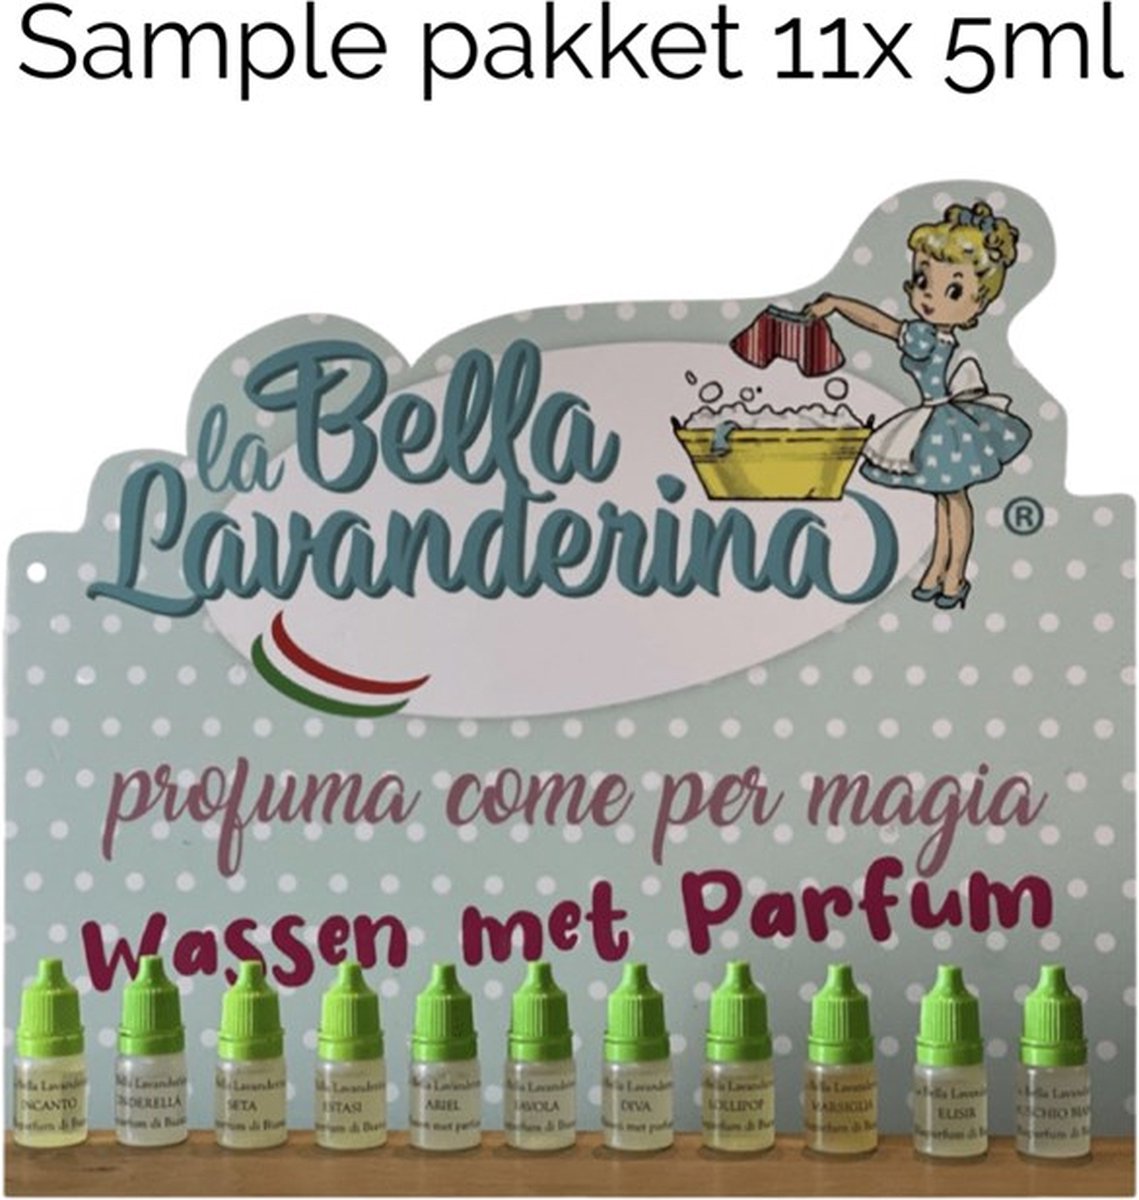 Wasparfum sample pakket - Wasmiddelen - Wasparfum proefpakket - Was parfum - 11 flesjes van 5ml